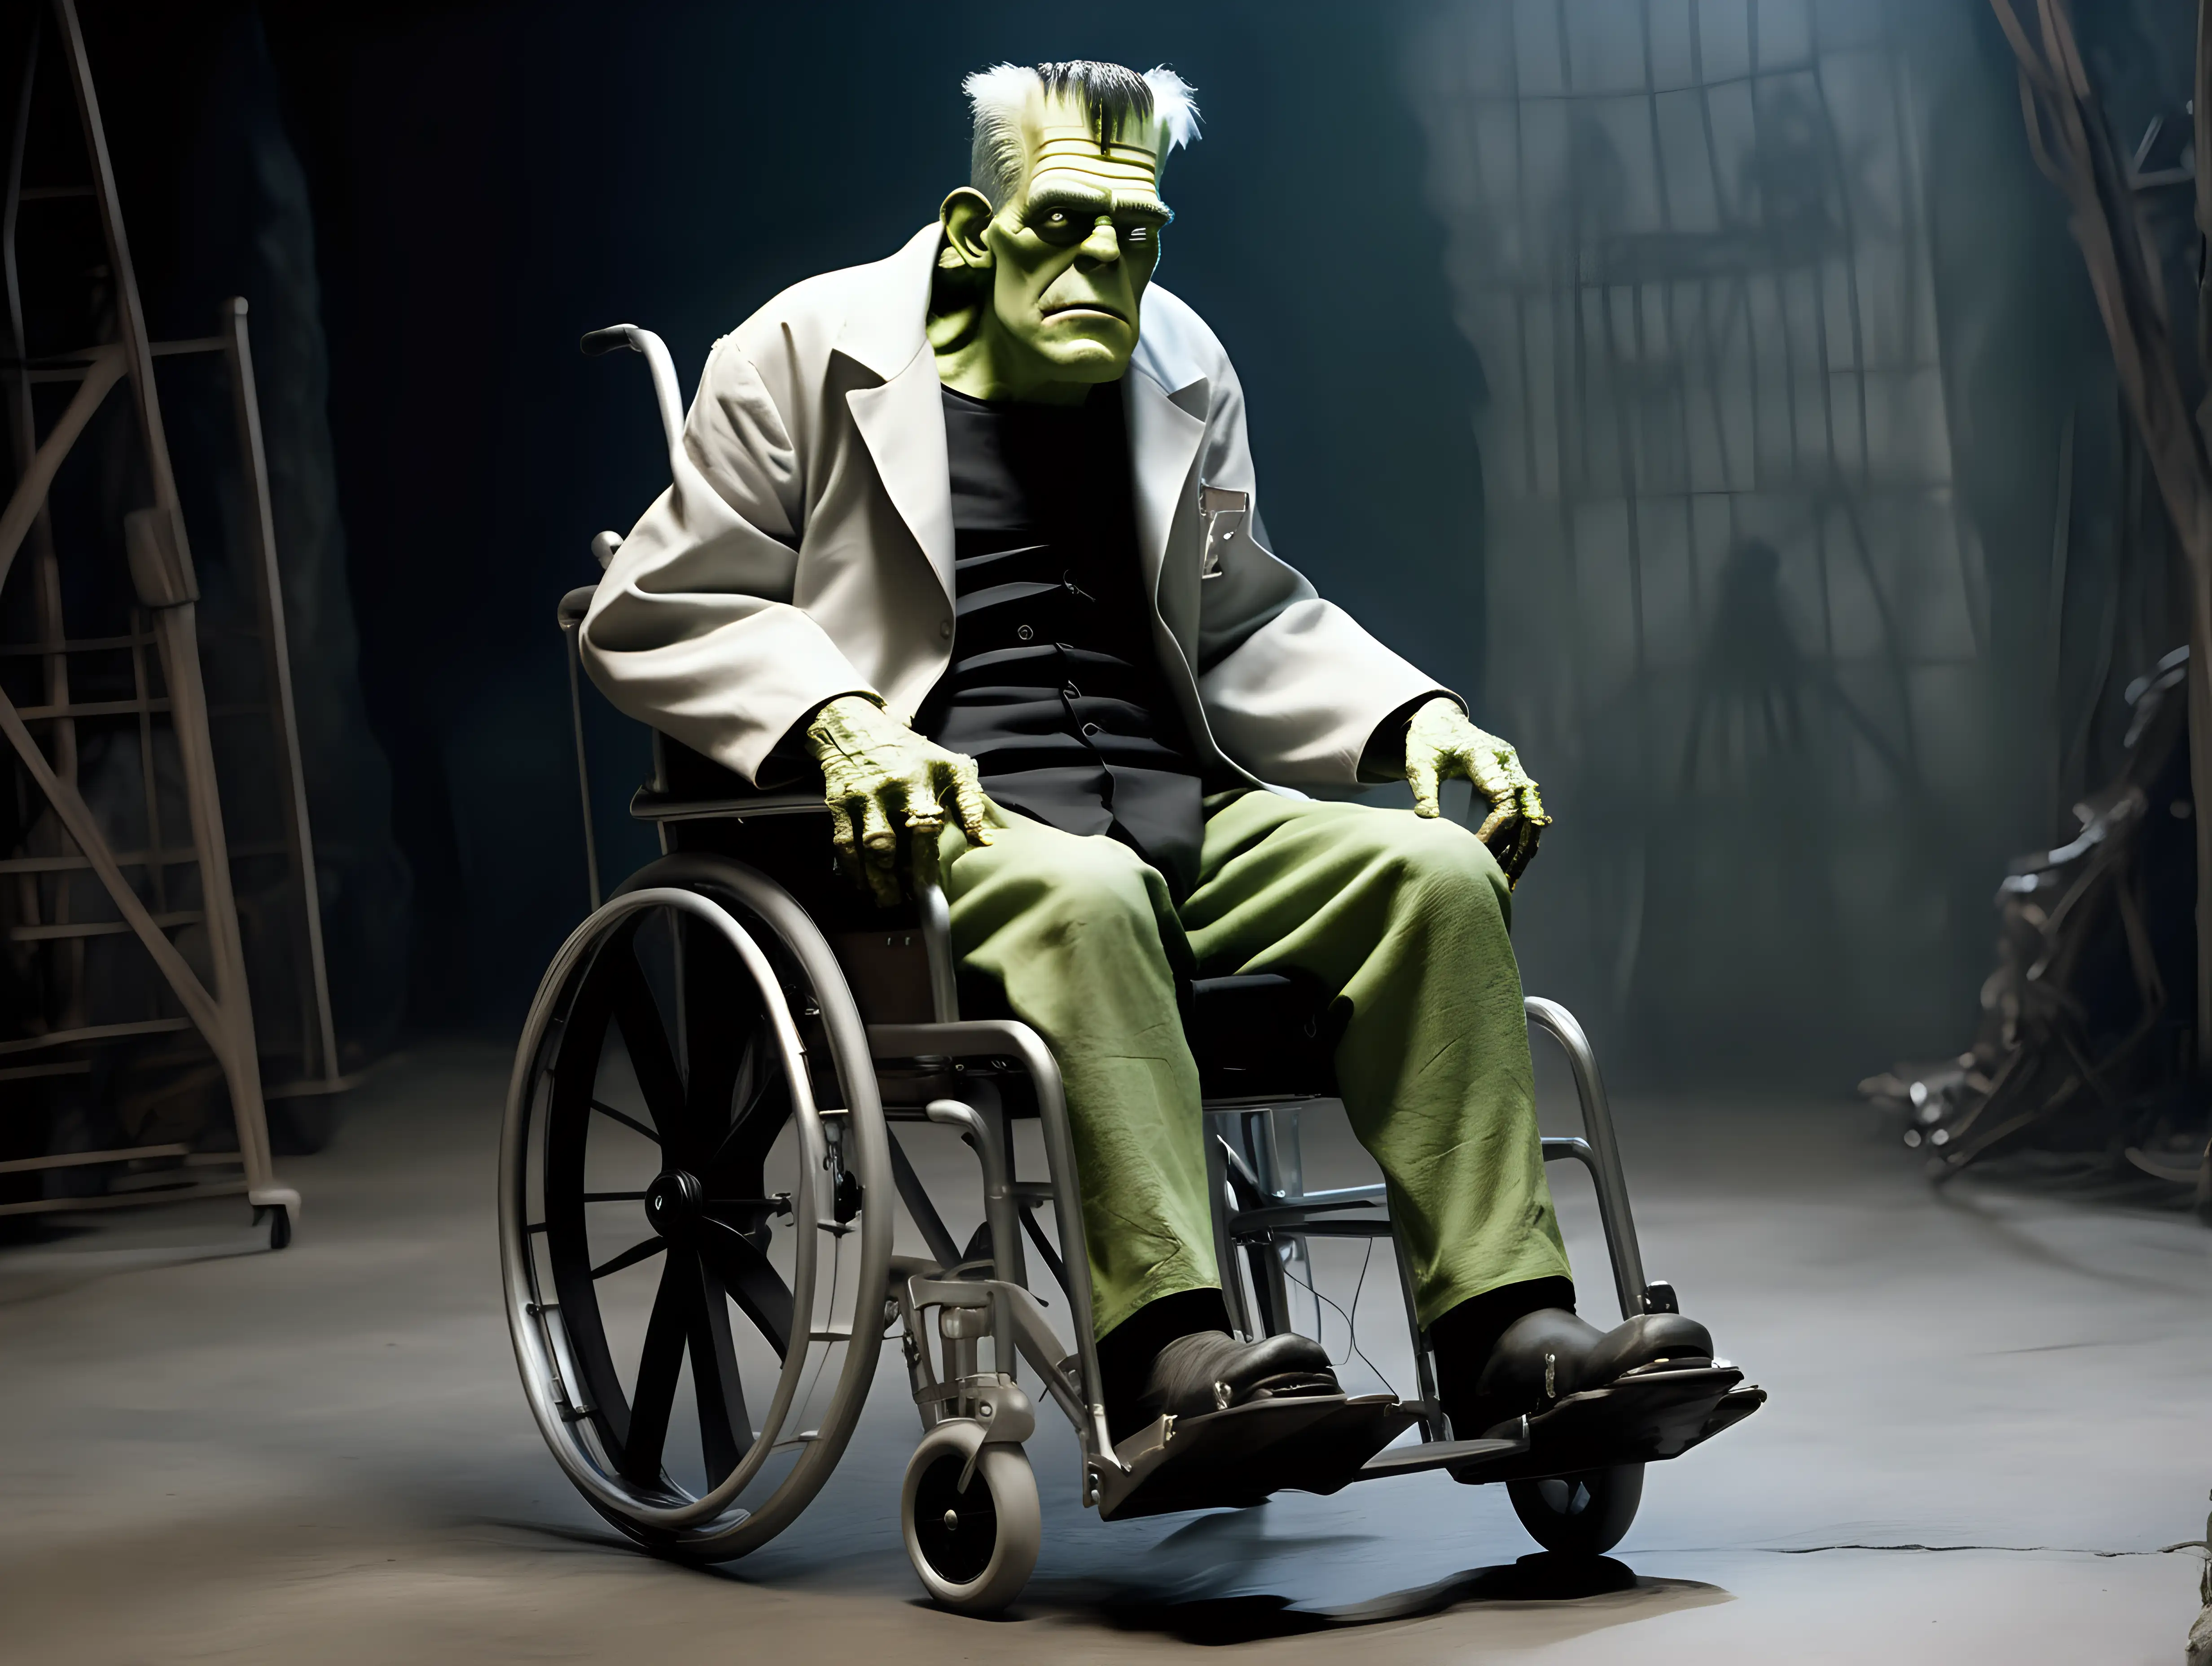 Old Frankenstein riding in a wheel chair